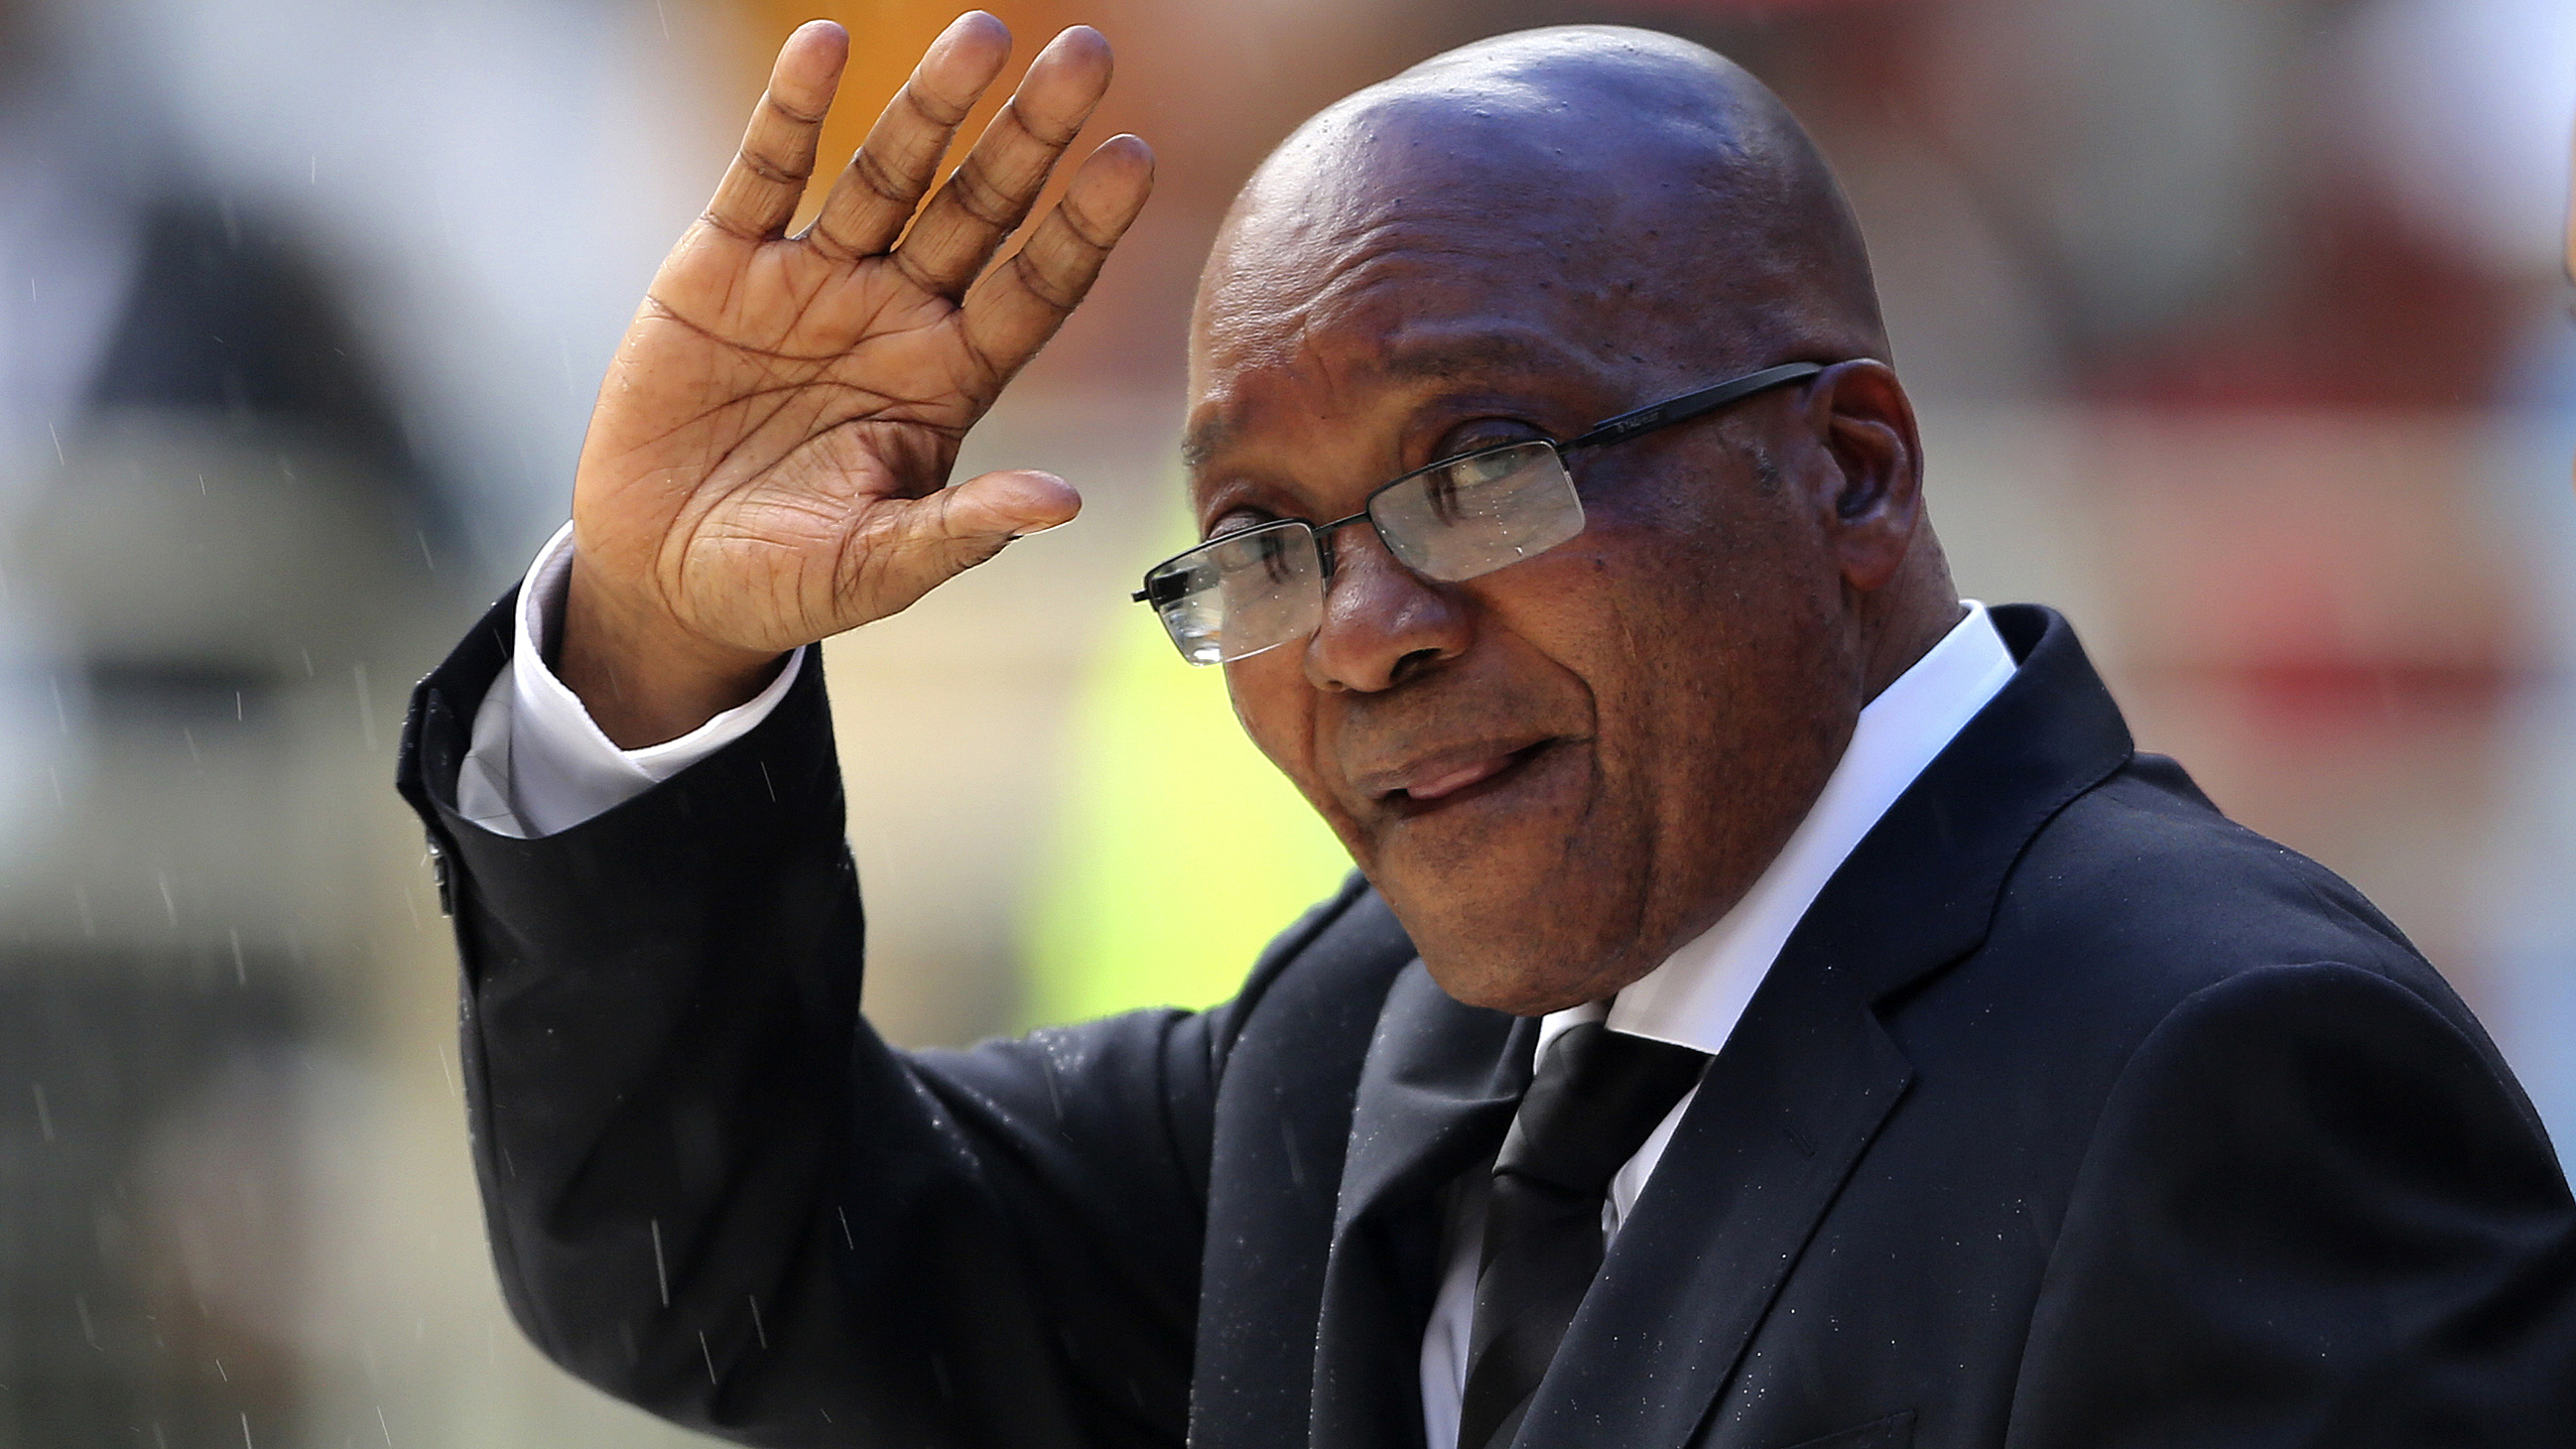 Jacob Zuma is booed at Mandela memorial (Image: Reuters)